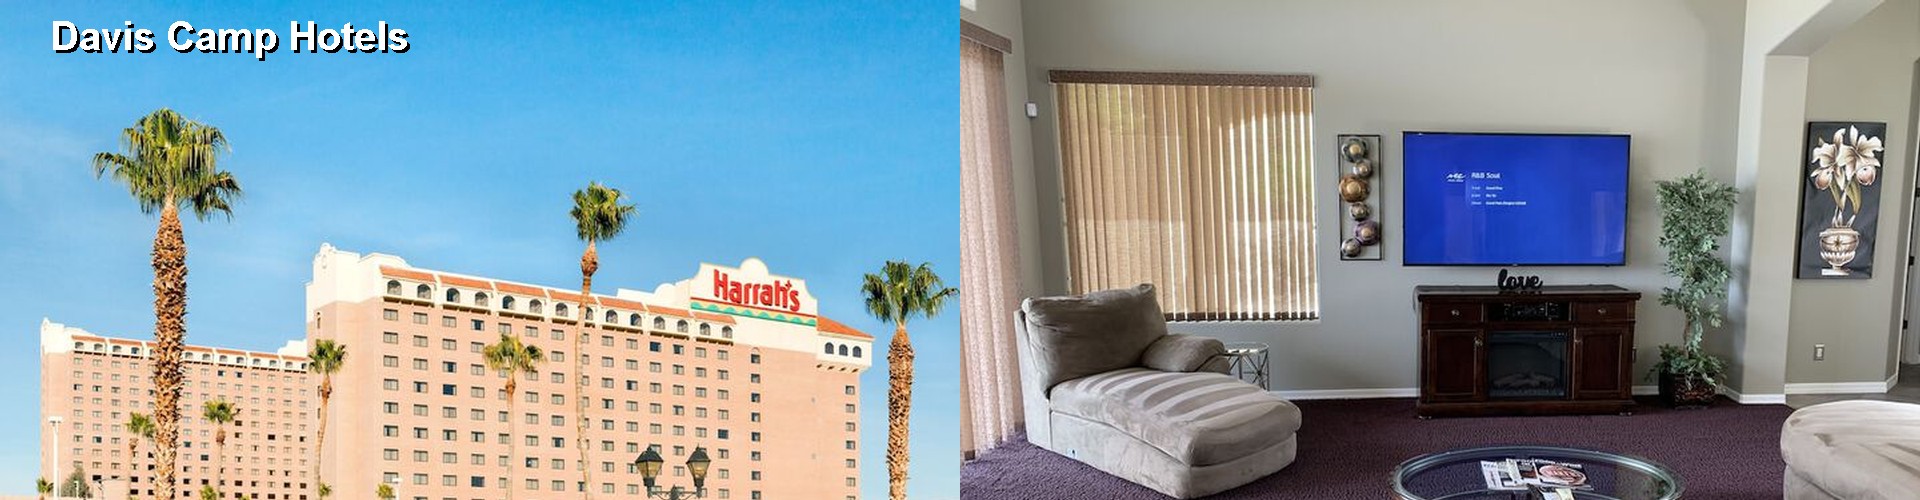 4 Best Hotels near Davis Camp